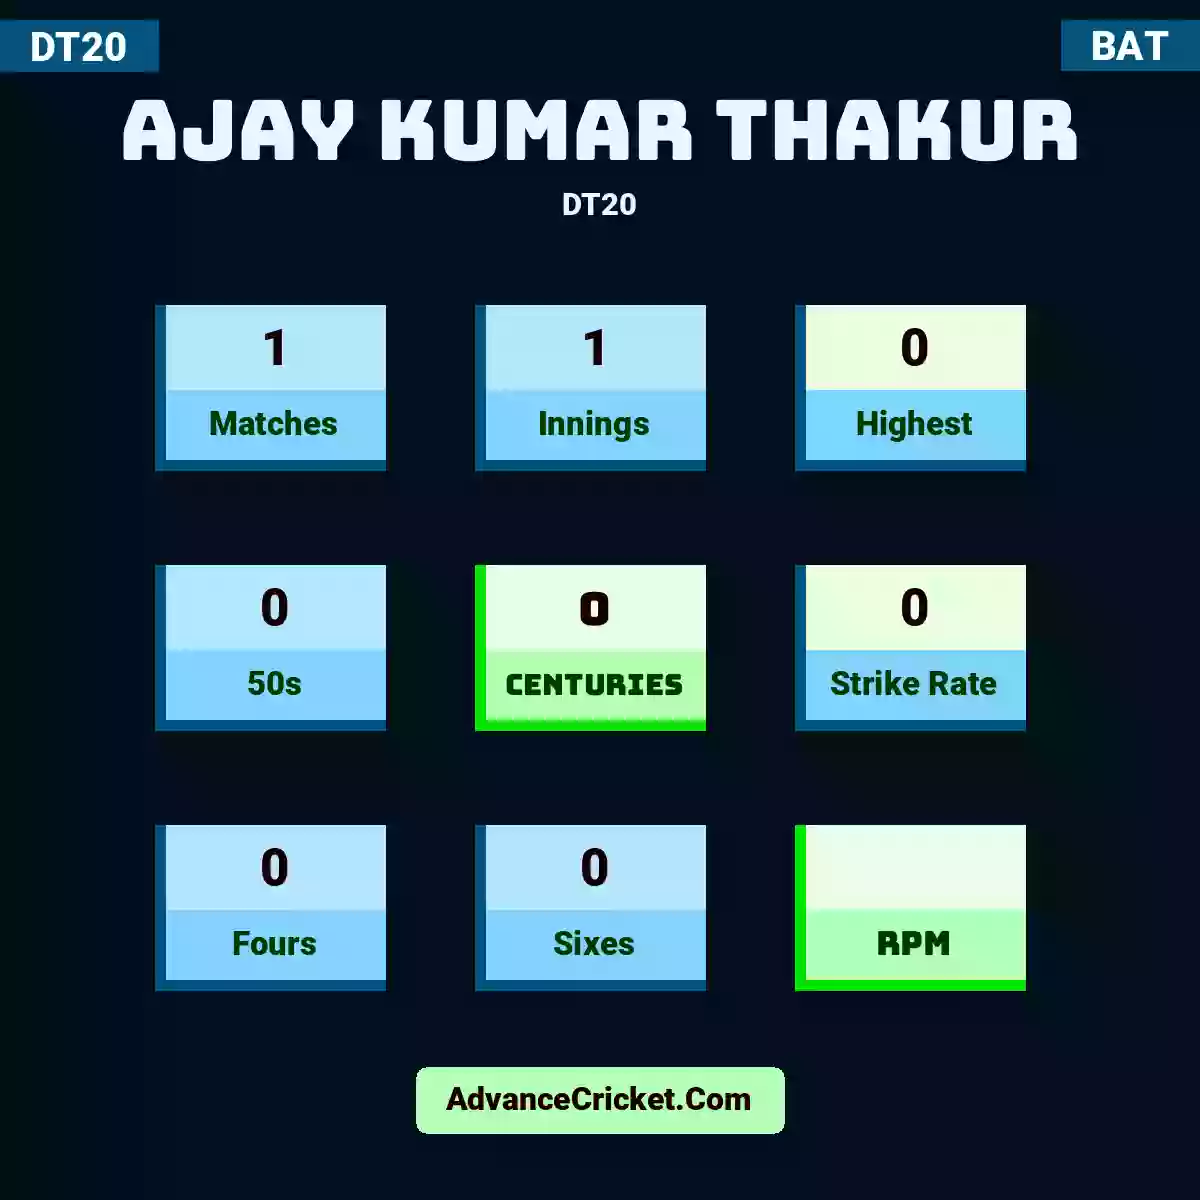 Ajay Kumar Thakur DT20 , Ajay Kumar Thakur played 1 matches, scored 0 runs as highest, 0 half-centuries, and 0 centuries, with a strike rate of 0. A.Kumar.Thakur hit 0 fours and 0 sixes.